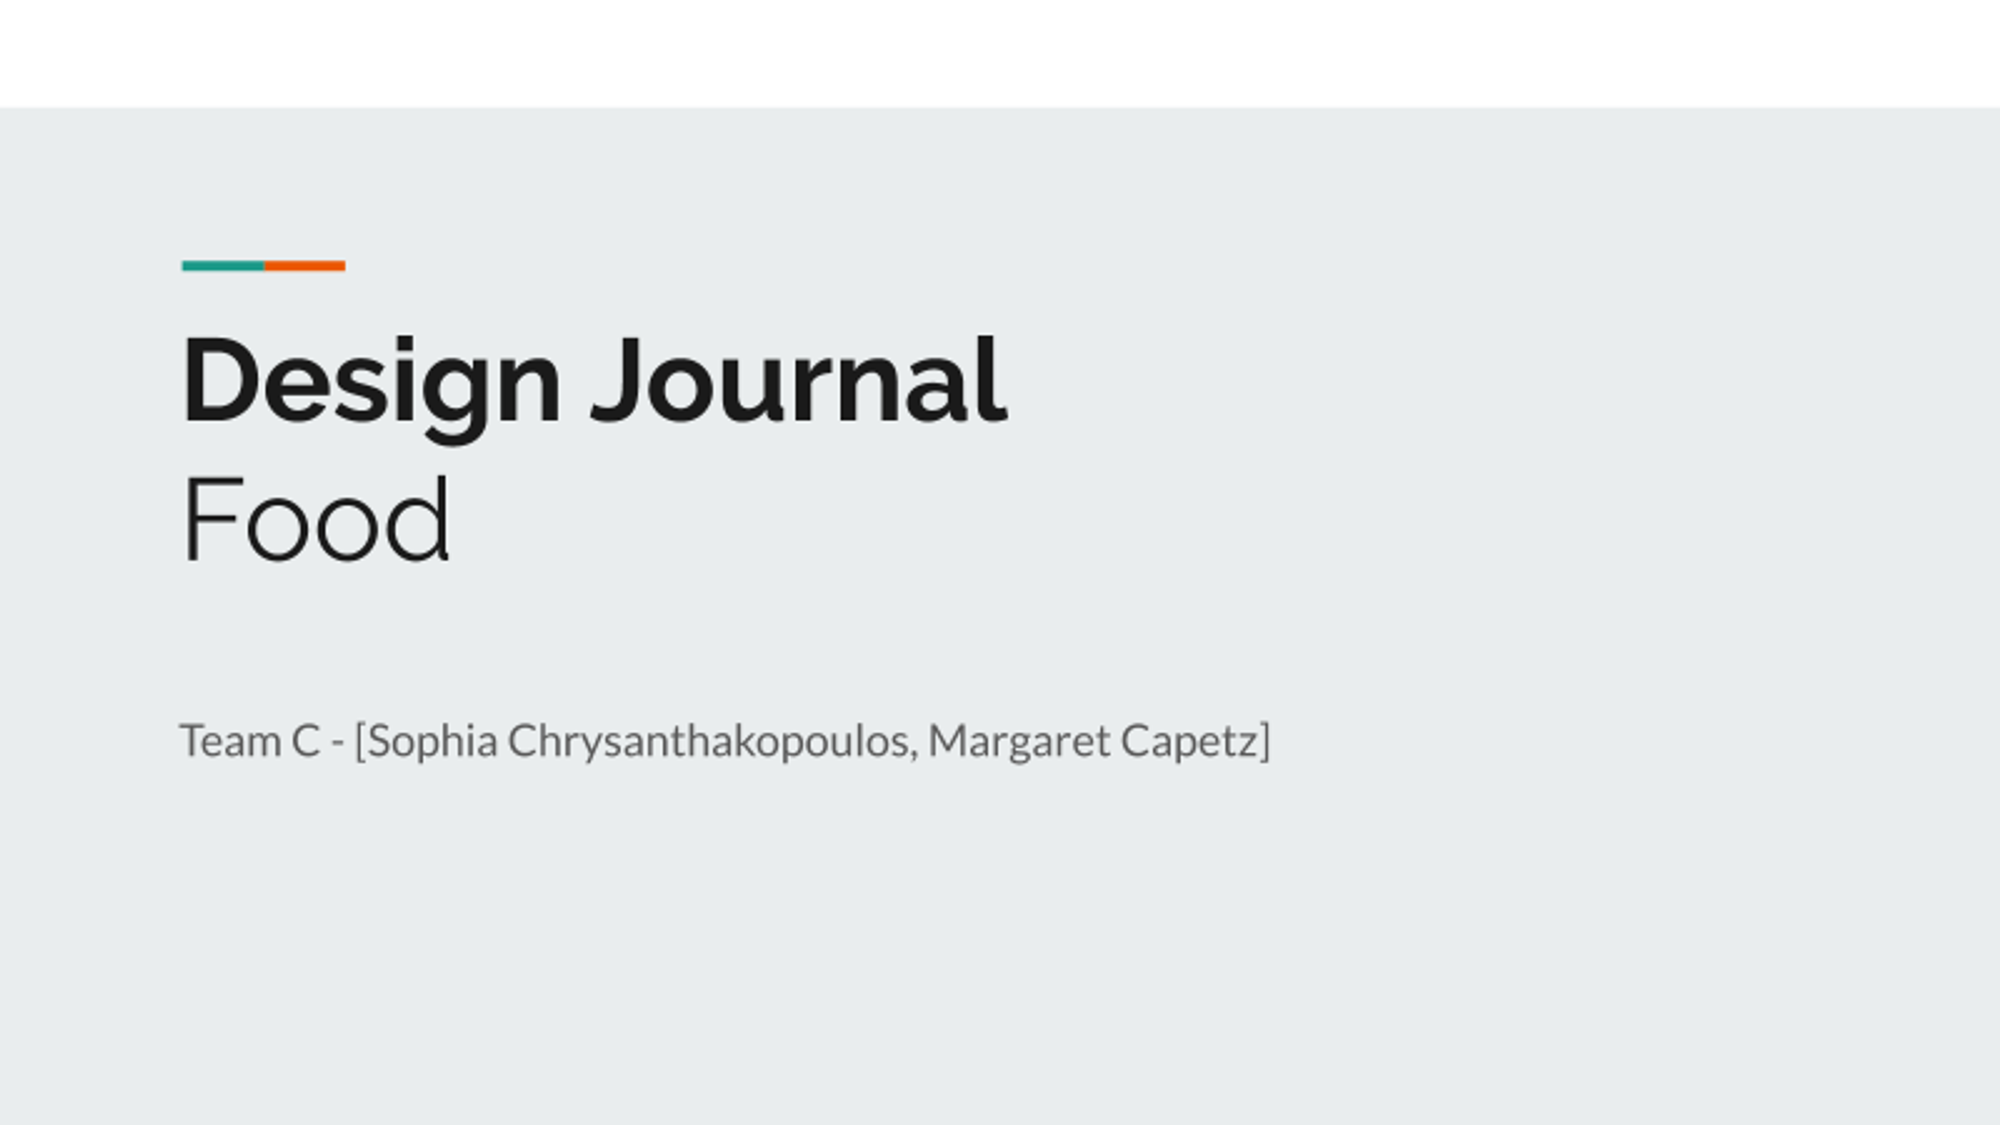 Team Design Journal - Team C